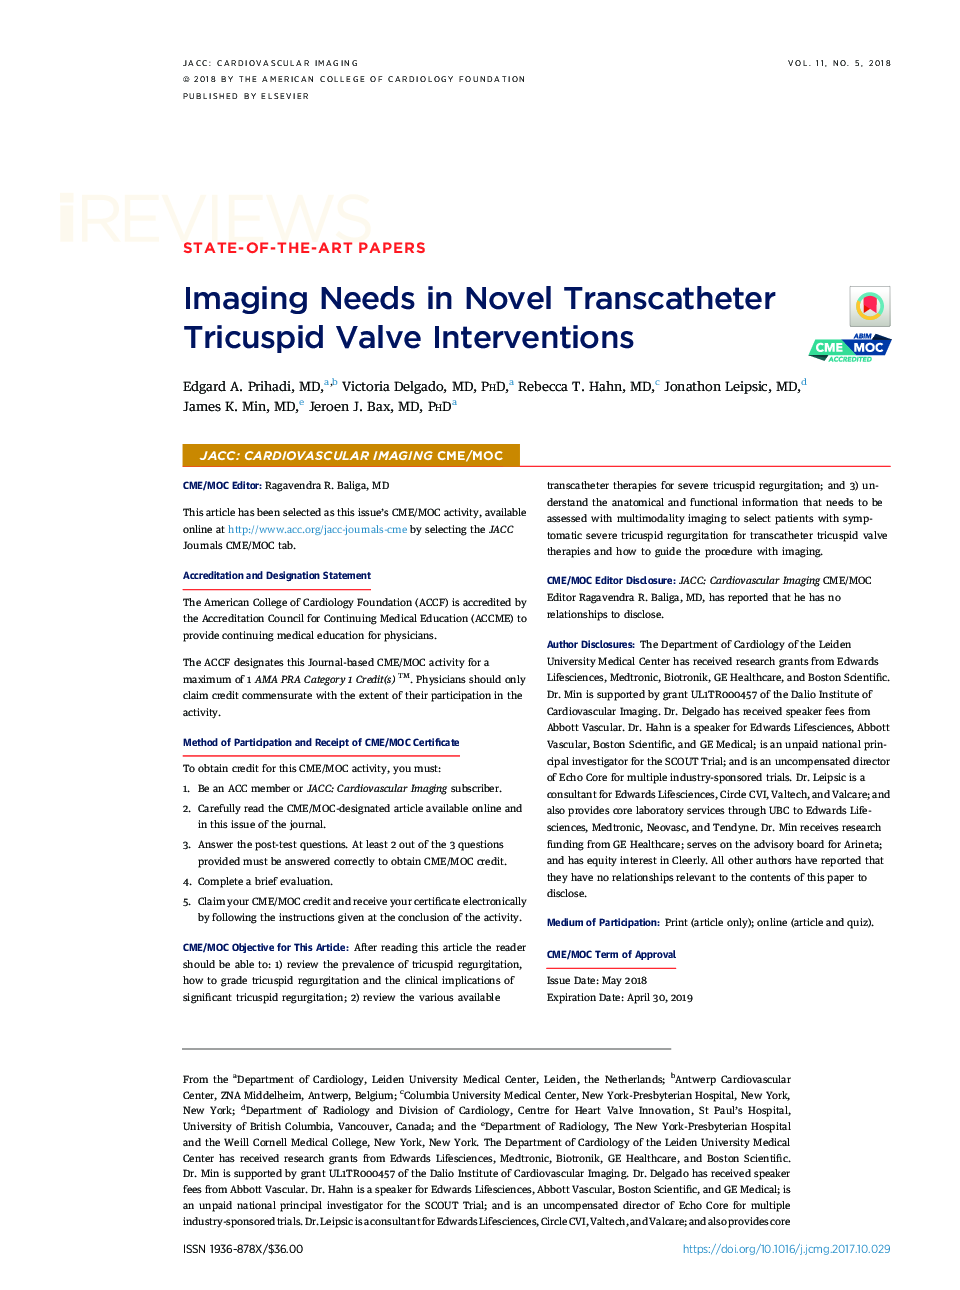 Imaging Needs in Novel Transcatheter TricuspidÂ Valve Interventions